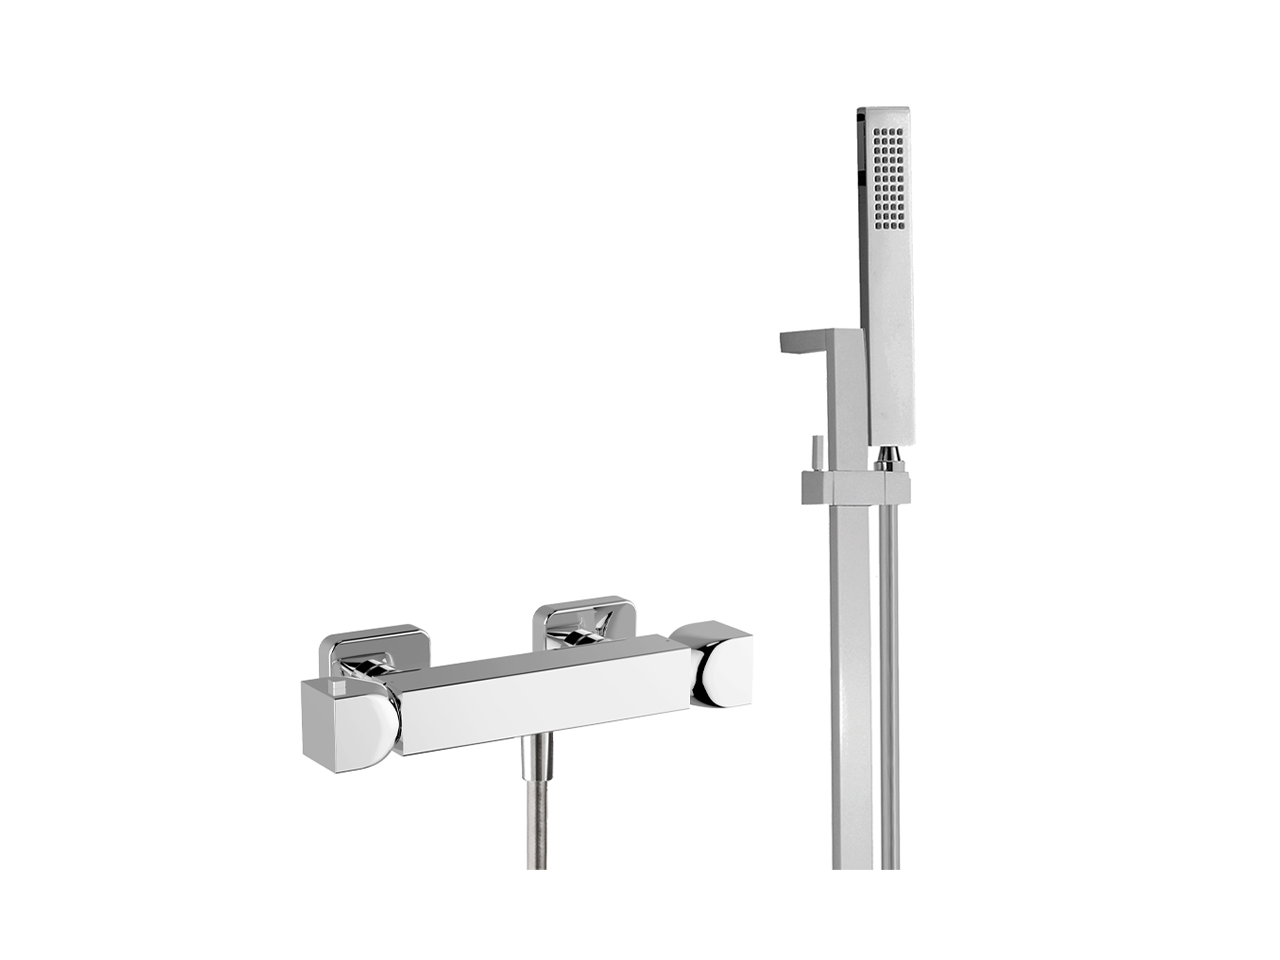 CisalThermostatic shower mixer with sliding bar HI-RISE_RIS01010